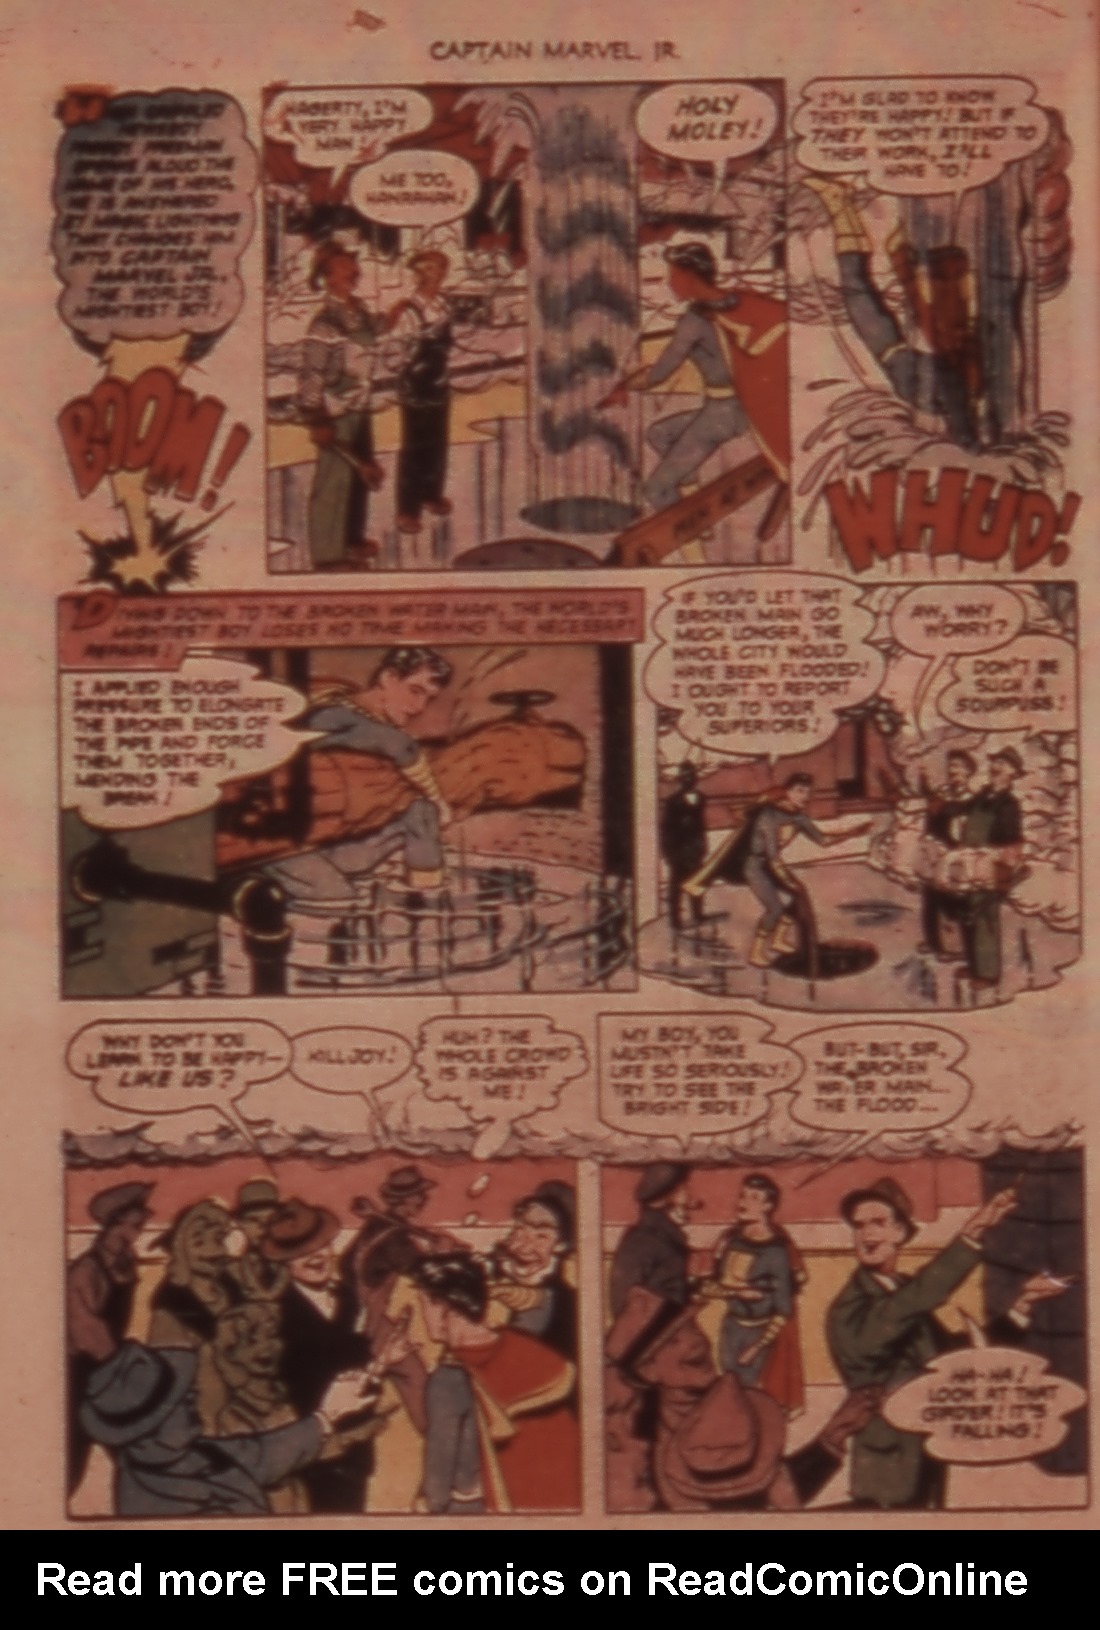 Read online Captain Marvel, Jr. comic -  Issue #112 - 20